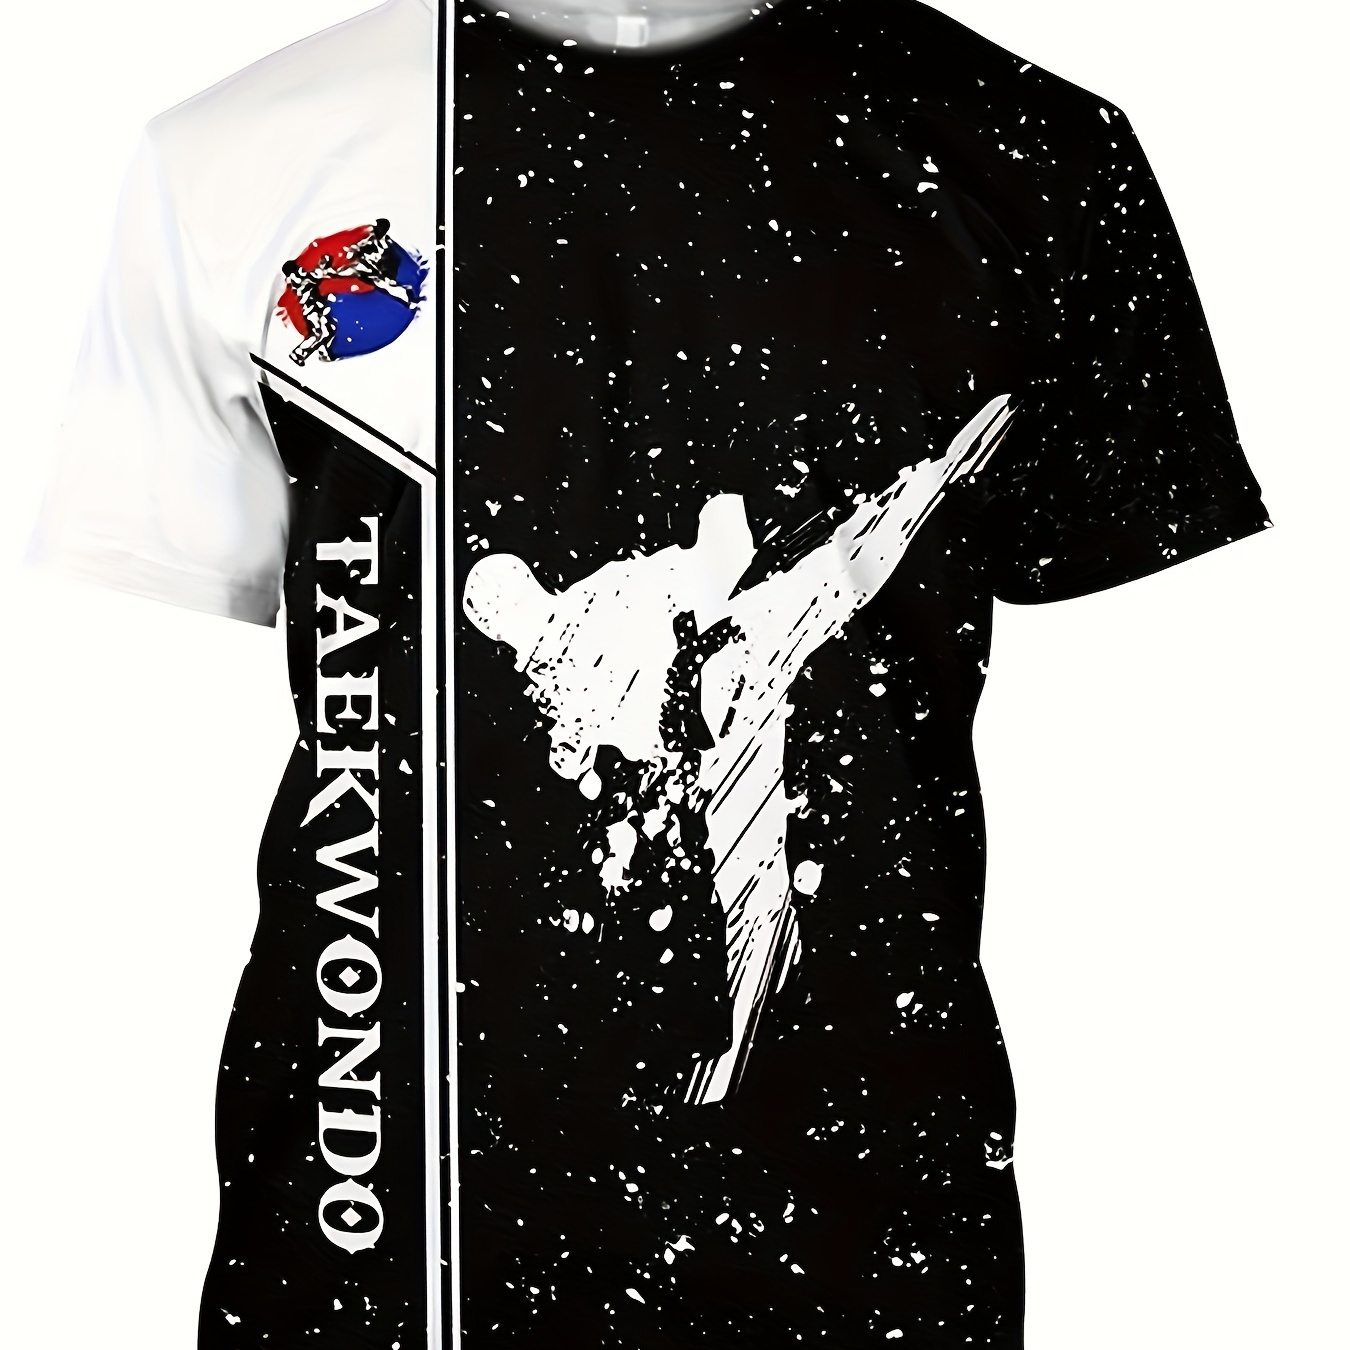 

Taekwondo Print Tee Shirt, Tees For Men, Casual Short Sleeve T-shirt For Summer